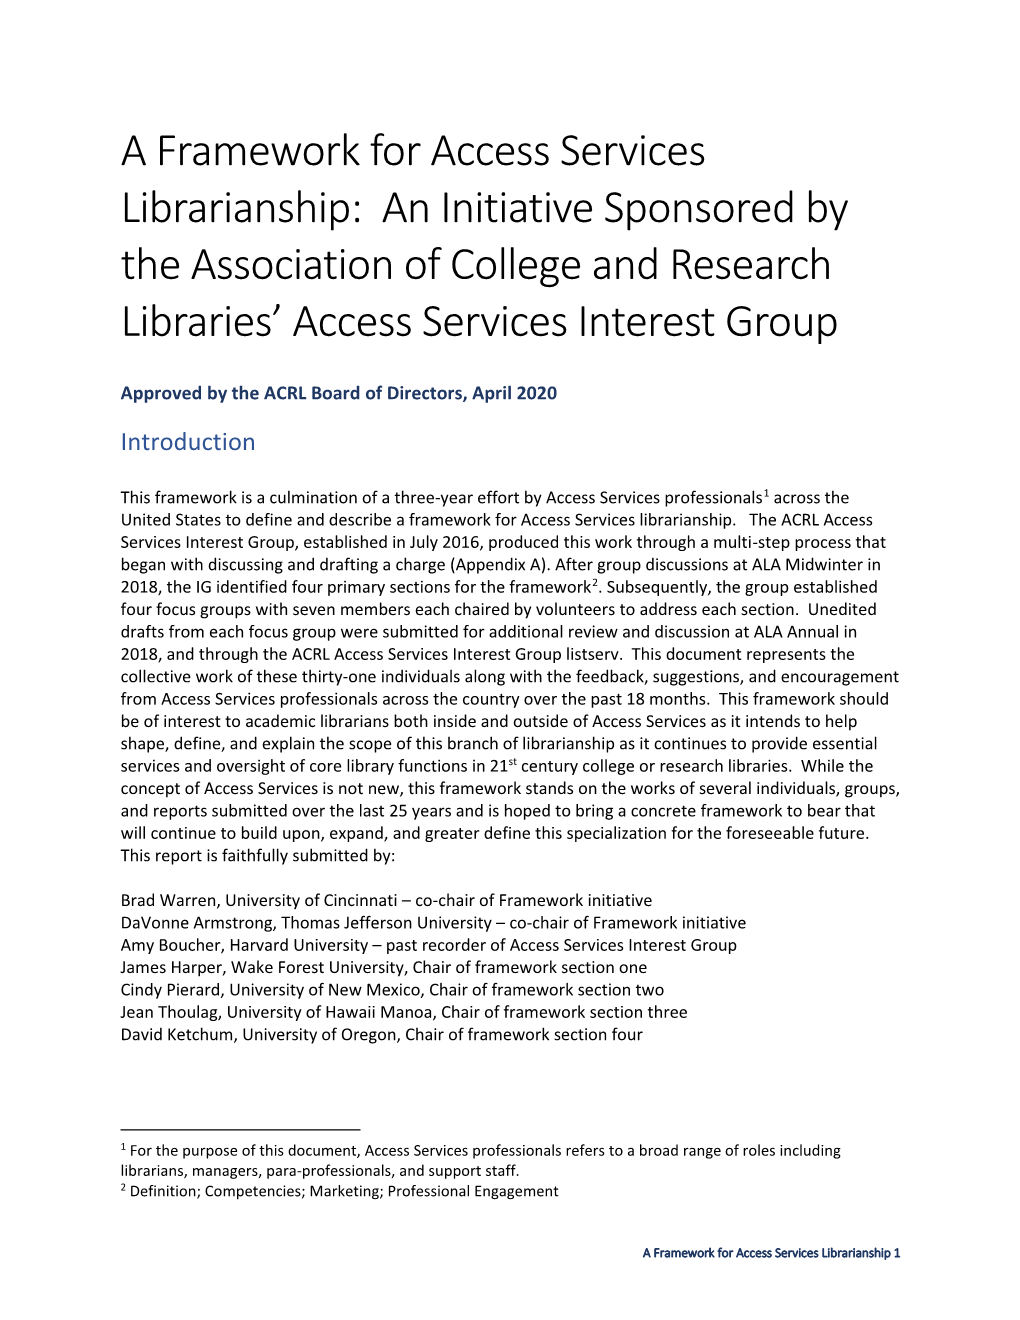 ACRL Framework for Access Services Librarianship